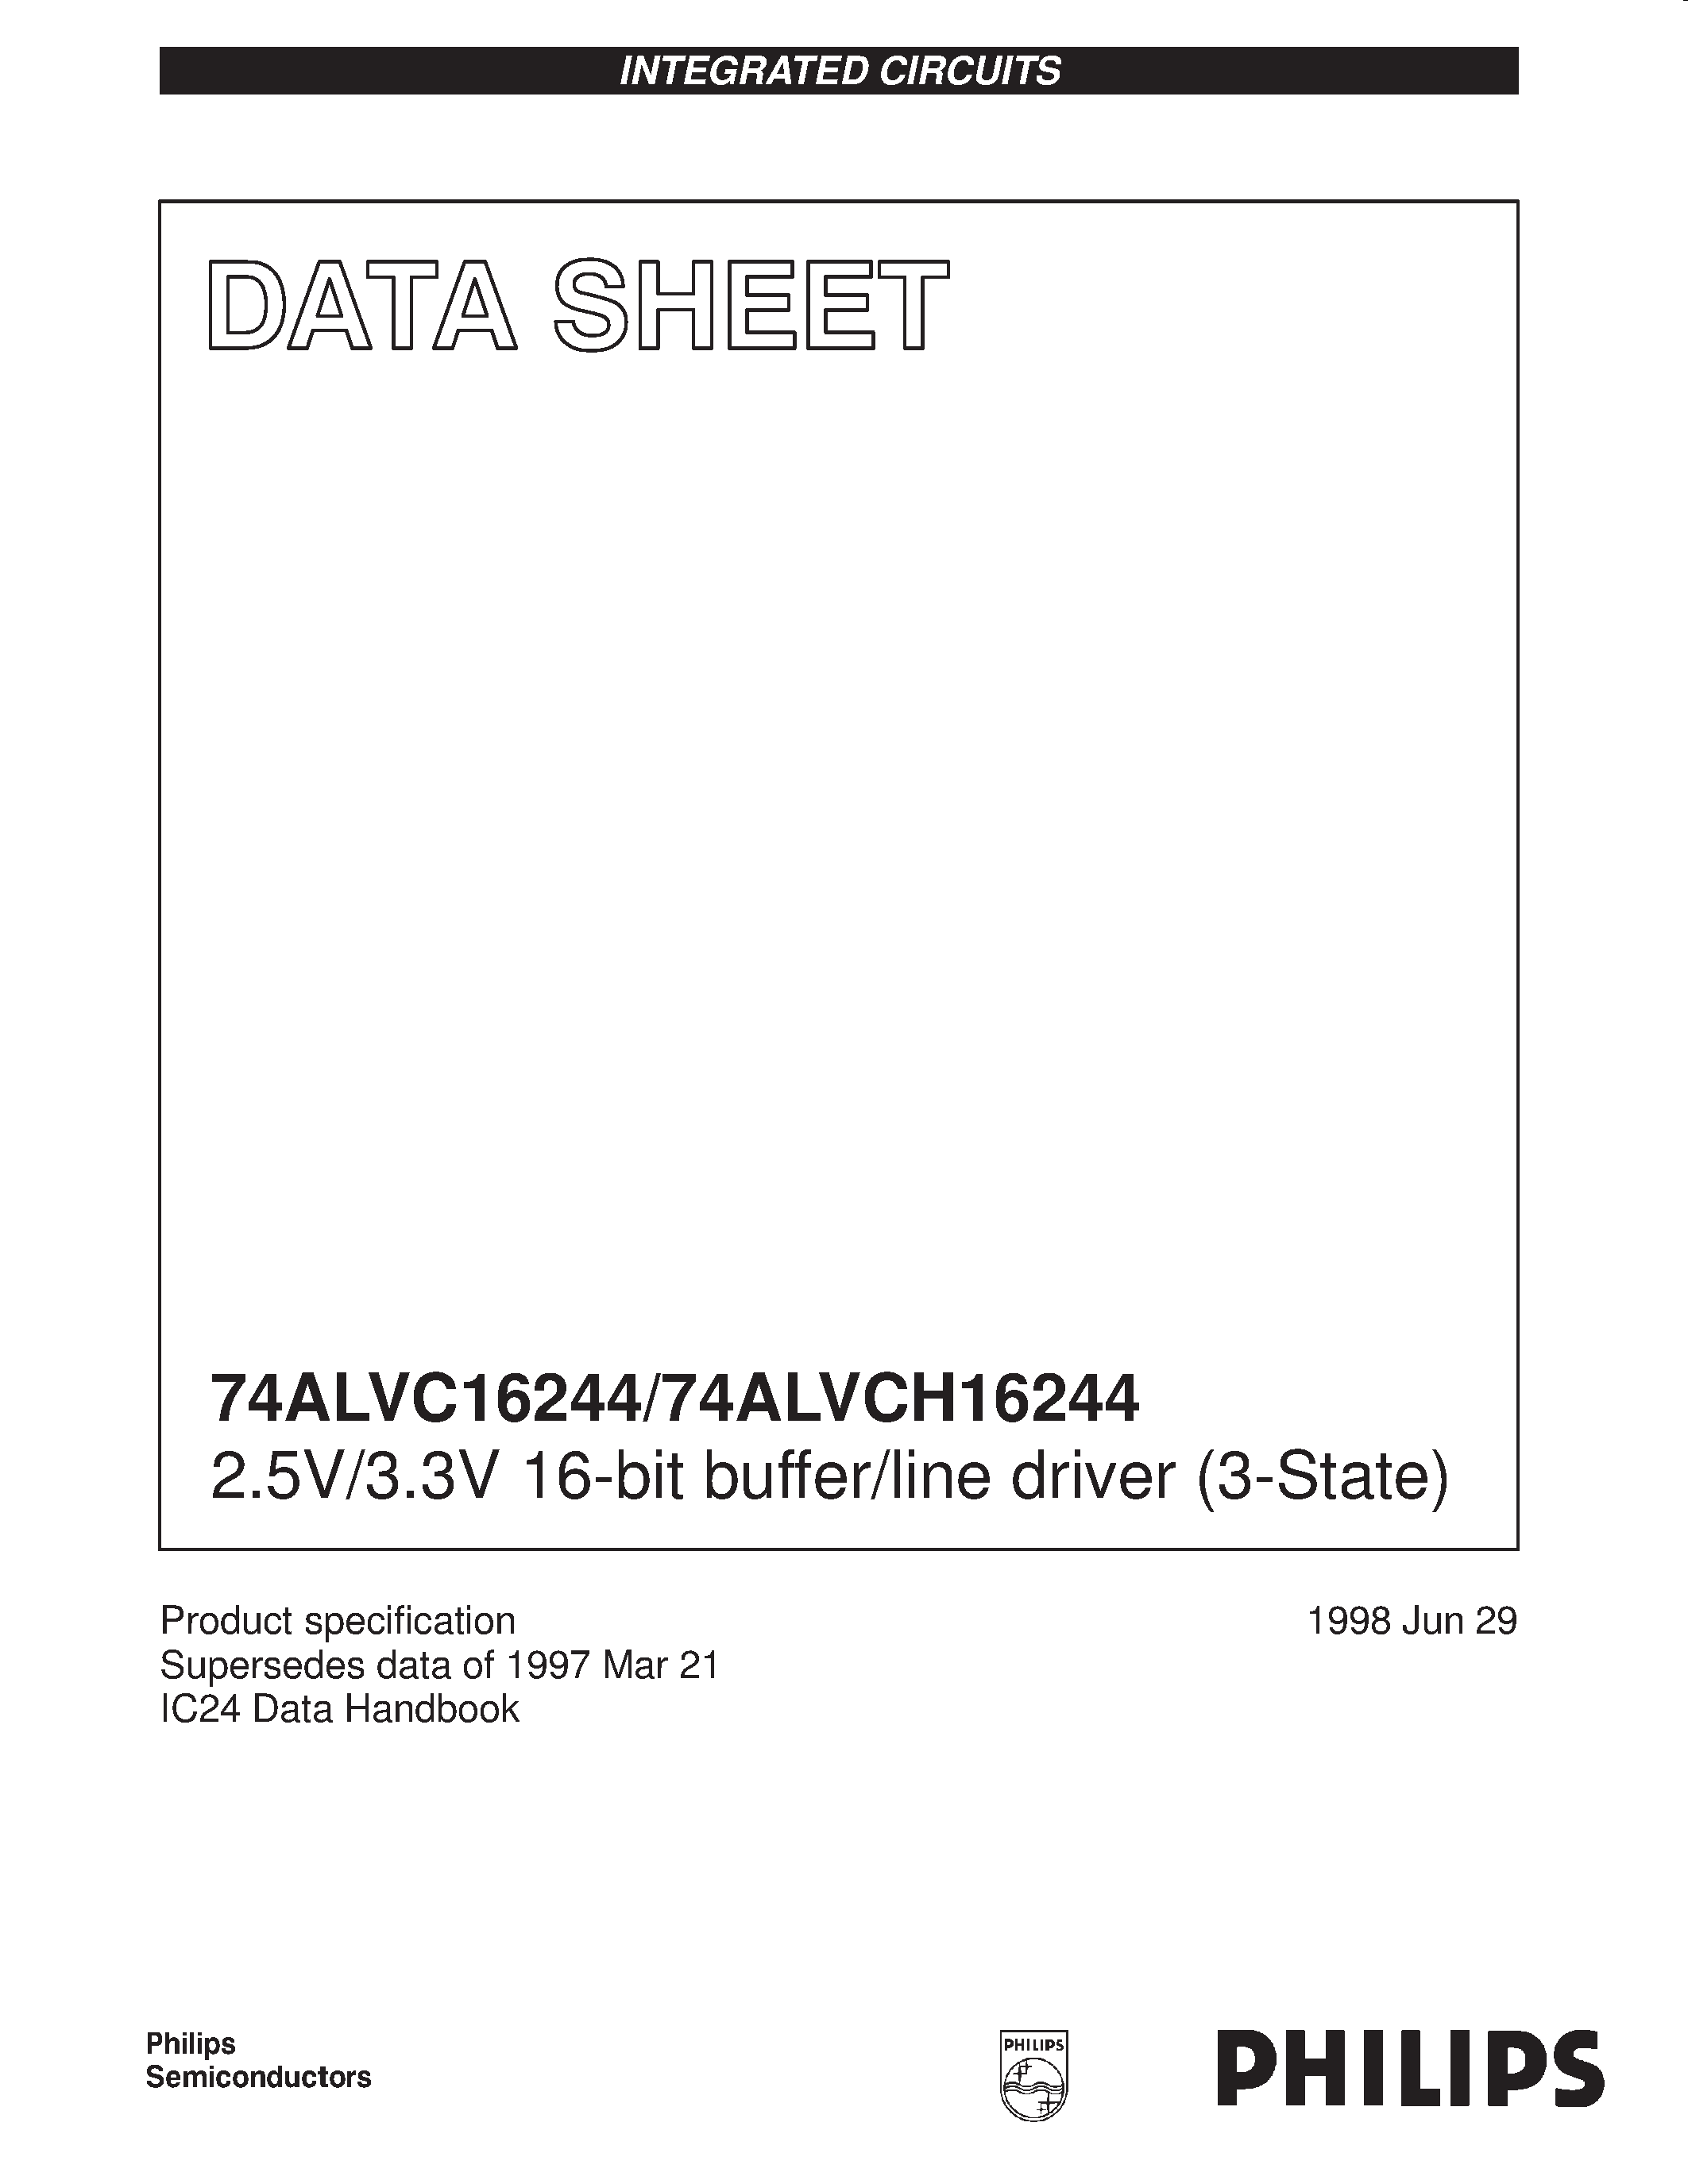 Datasheet 74ALVCH16244DL - 2.5V/3.3V 16-bit buffer/line driver 3-State page 1